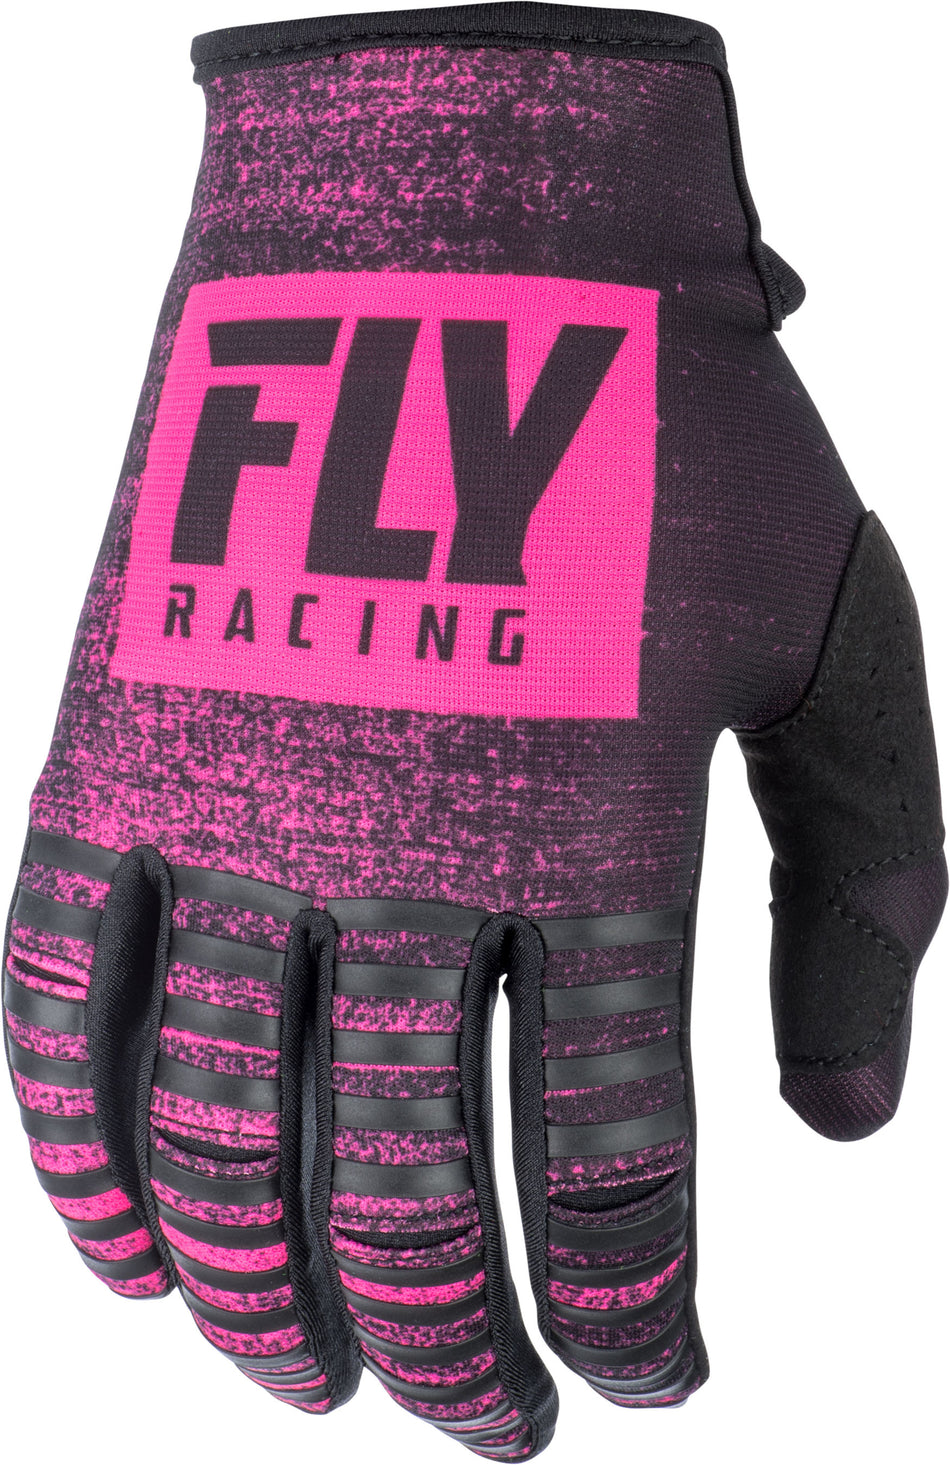 FLY RACING Kinetic Noiz Gloves Neon Pink/Black Sz 10 372-51810